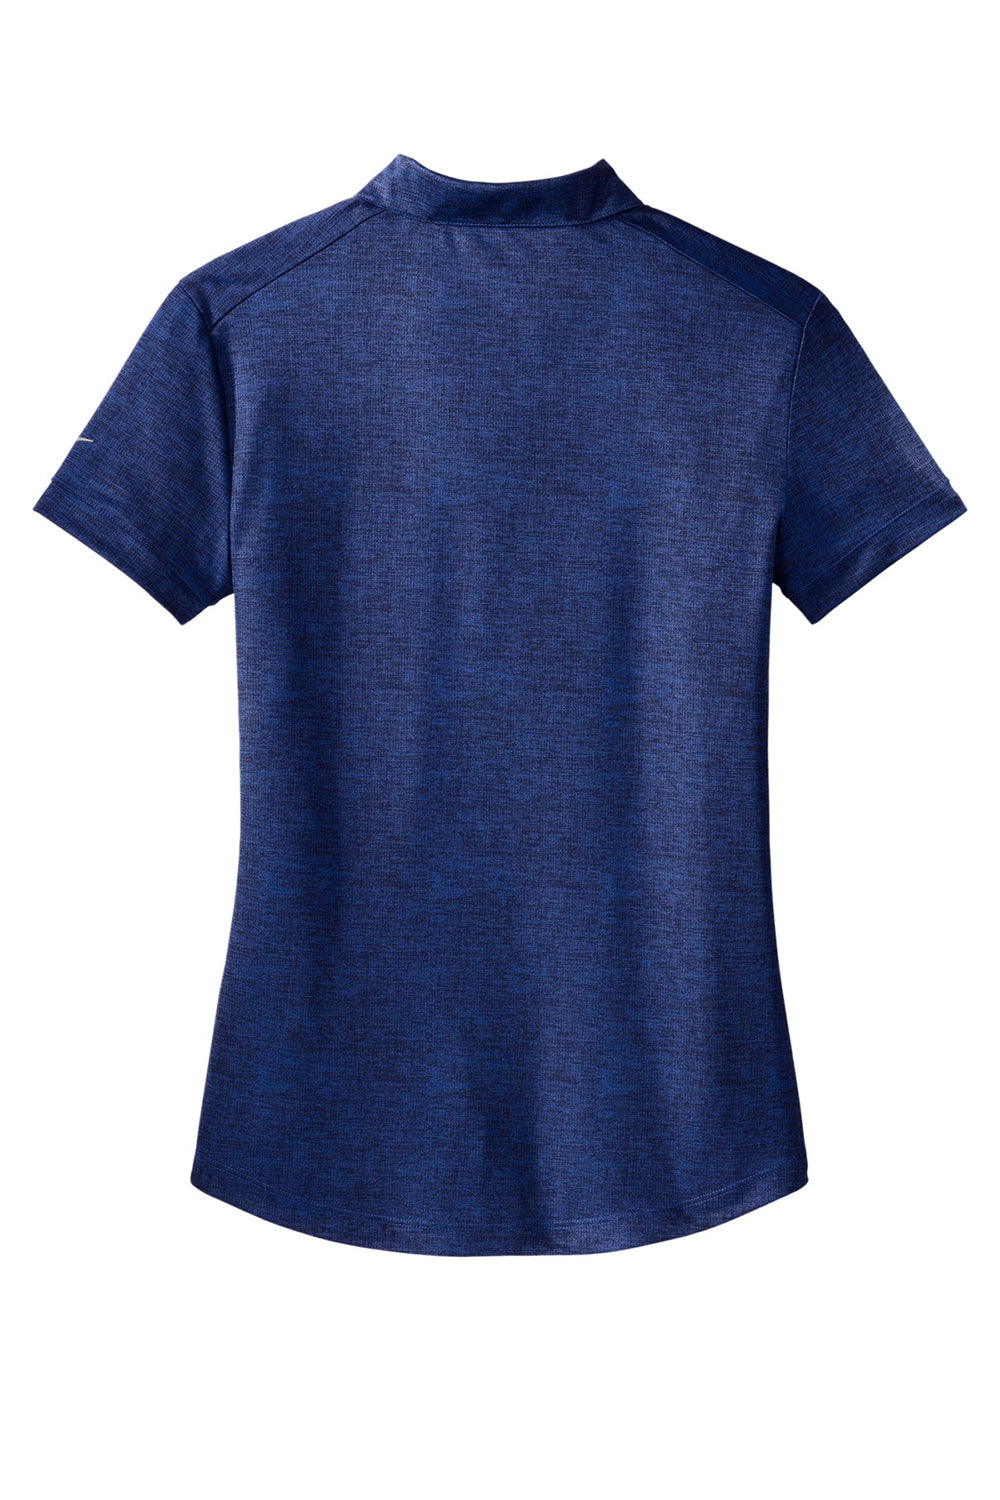 Nike 838961 Womens Dri-Fit Moisture Wicking Short Sleeve Polo Shirt Old Royal Blue Flat Back